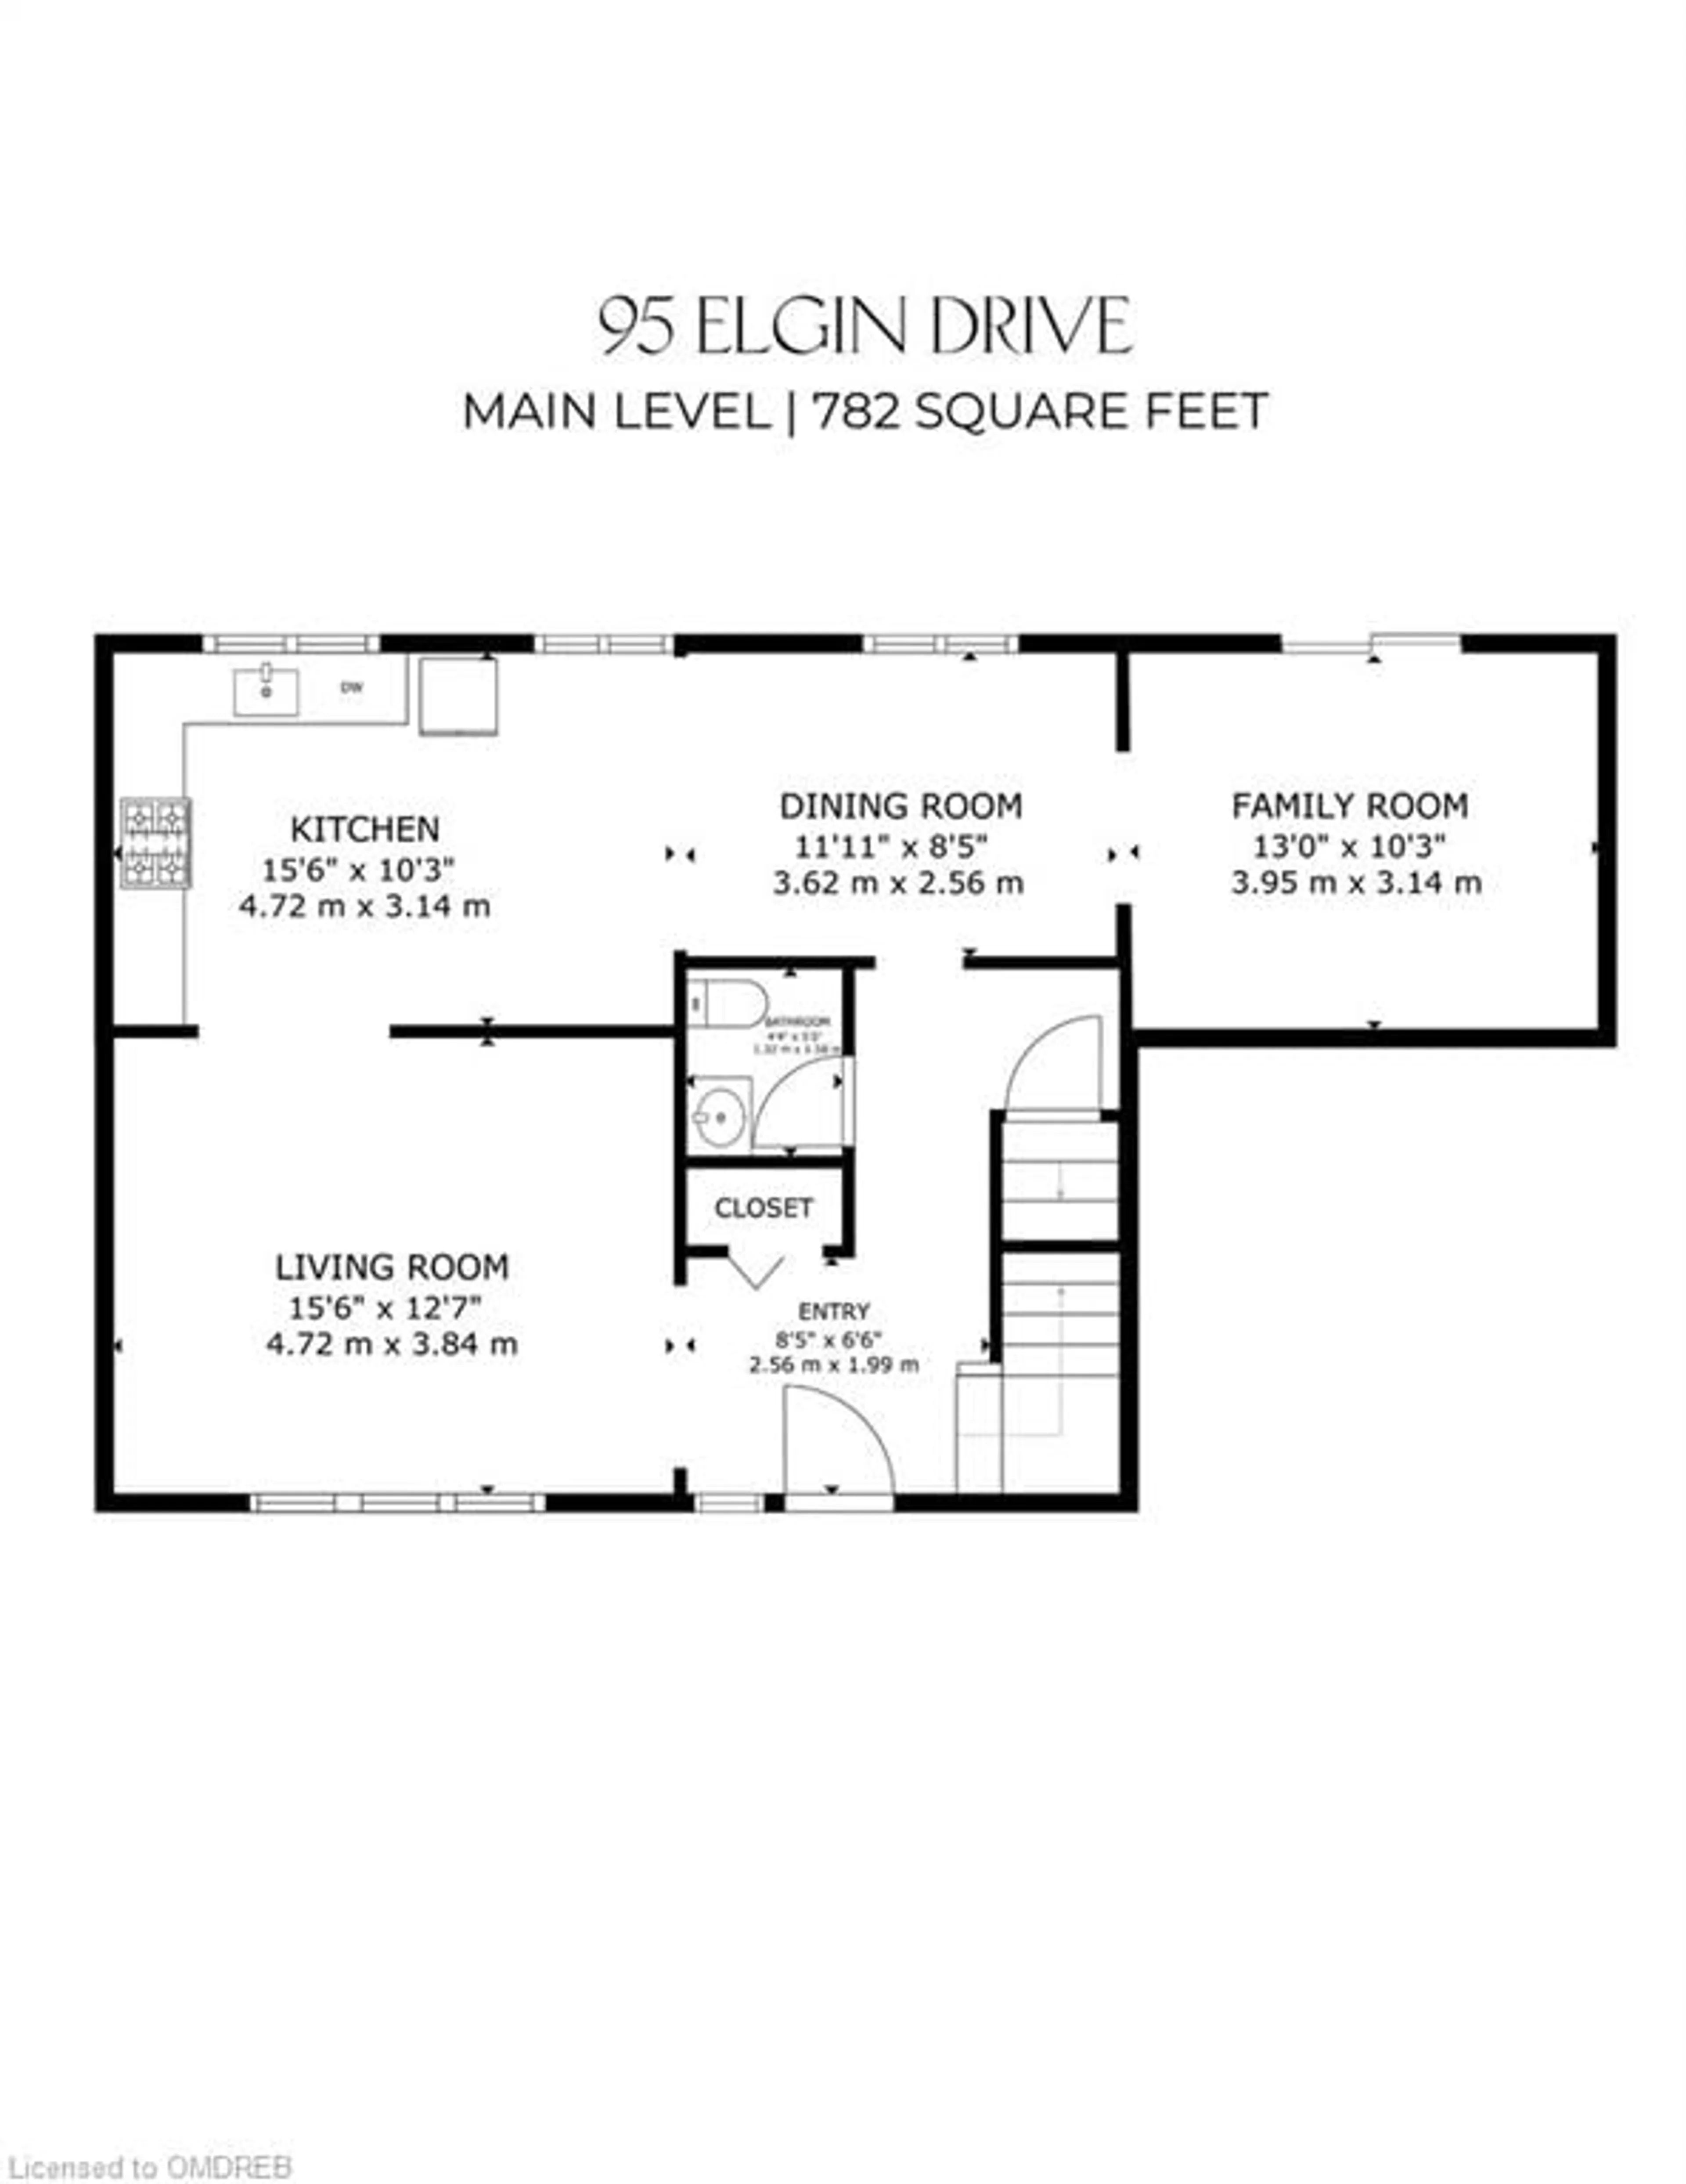 Floor plan for 95 Elgin Dr, Brampton Ontario L6Y 2E6